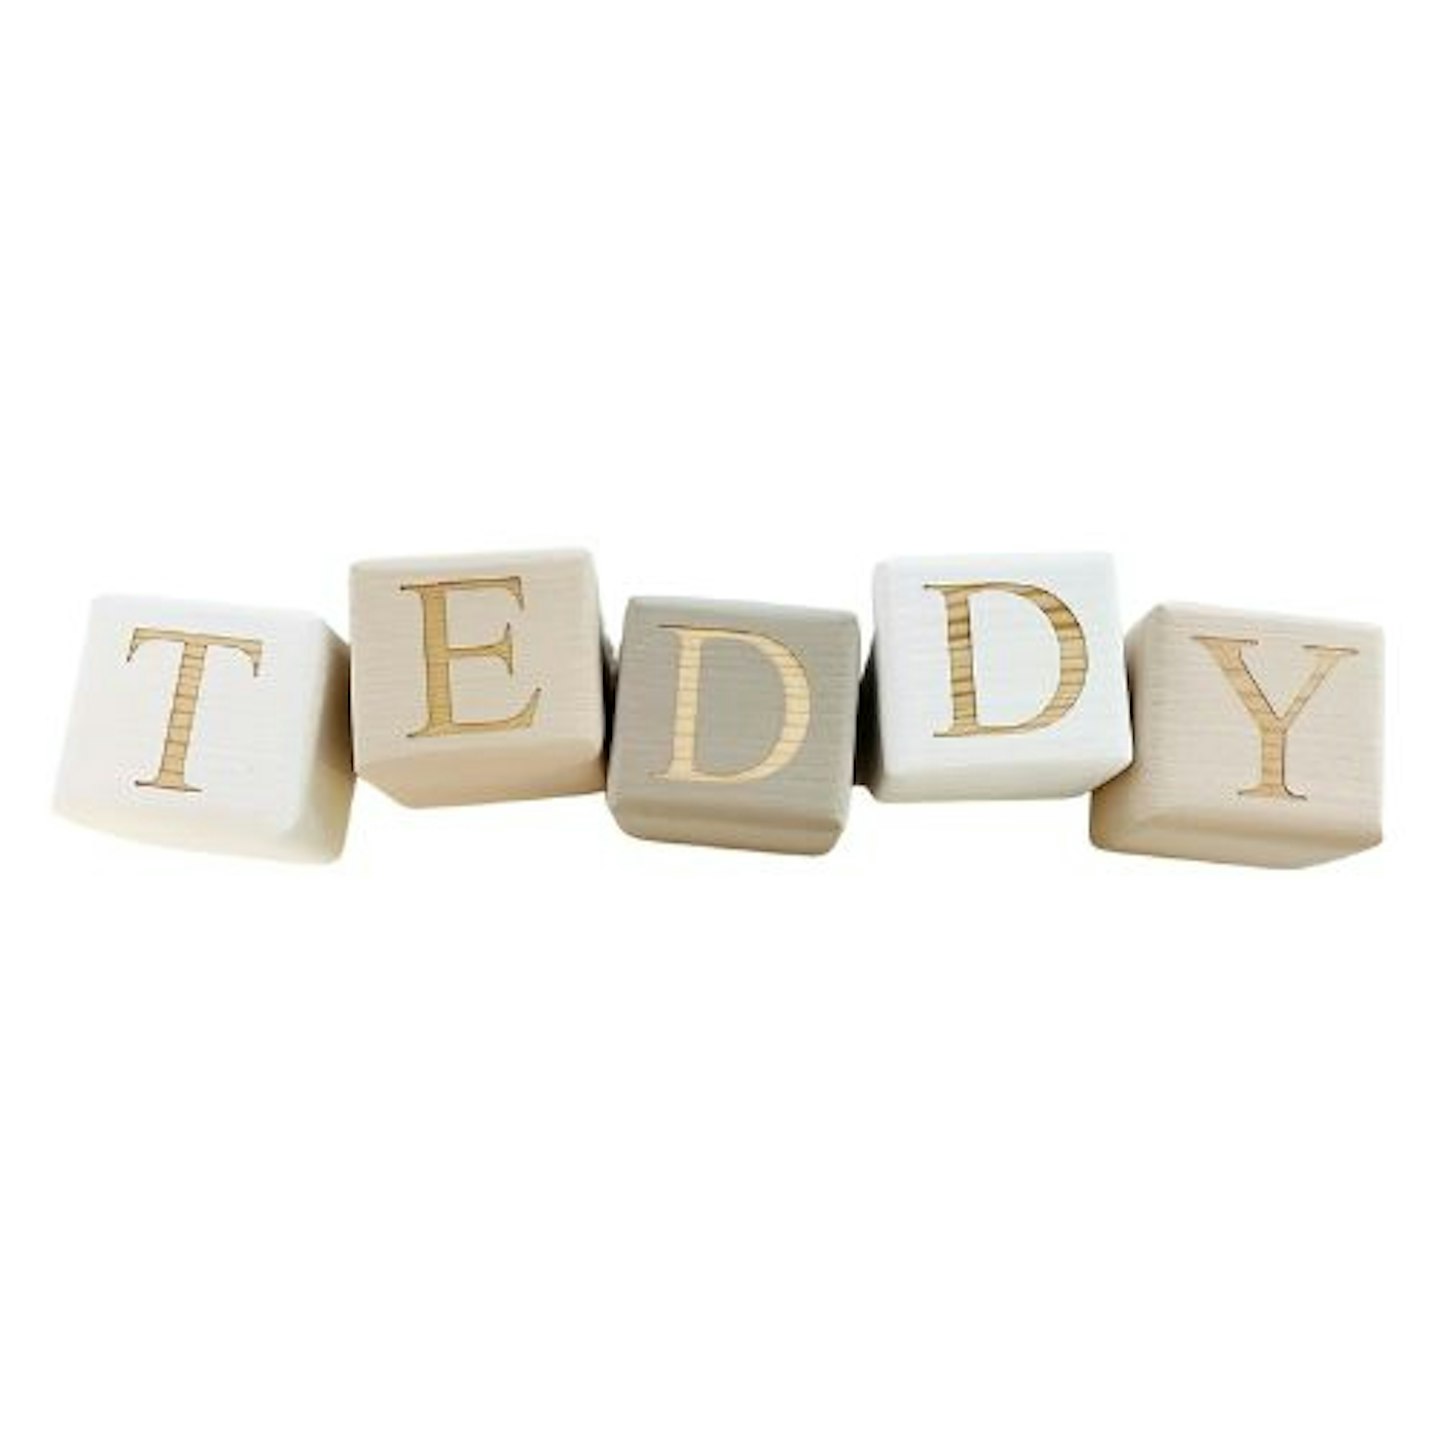 Personalised Wooden Baby Name Blocks